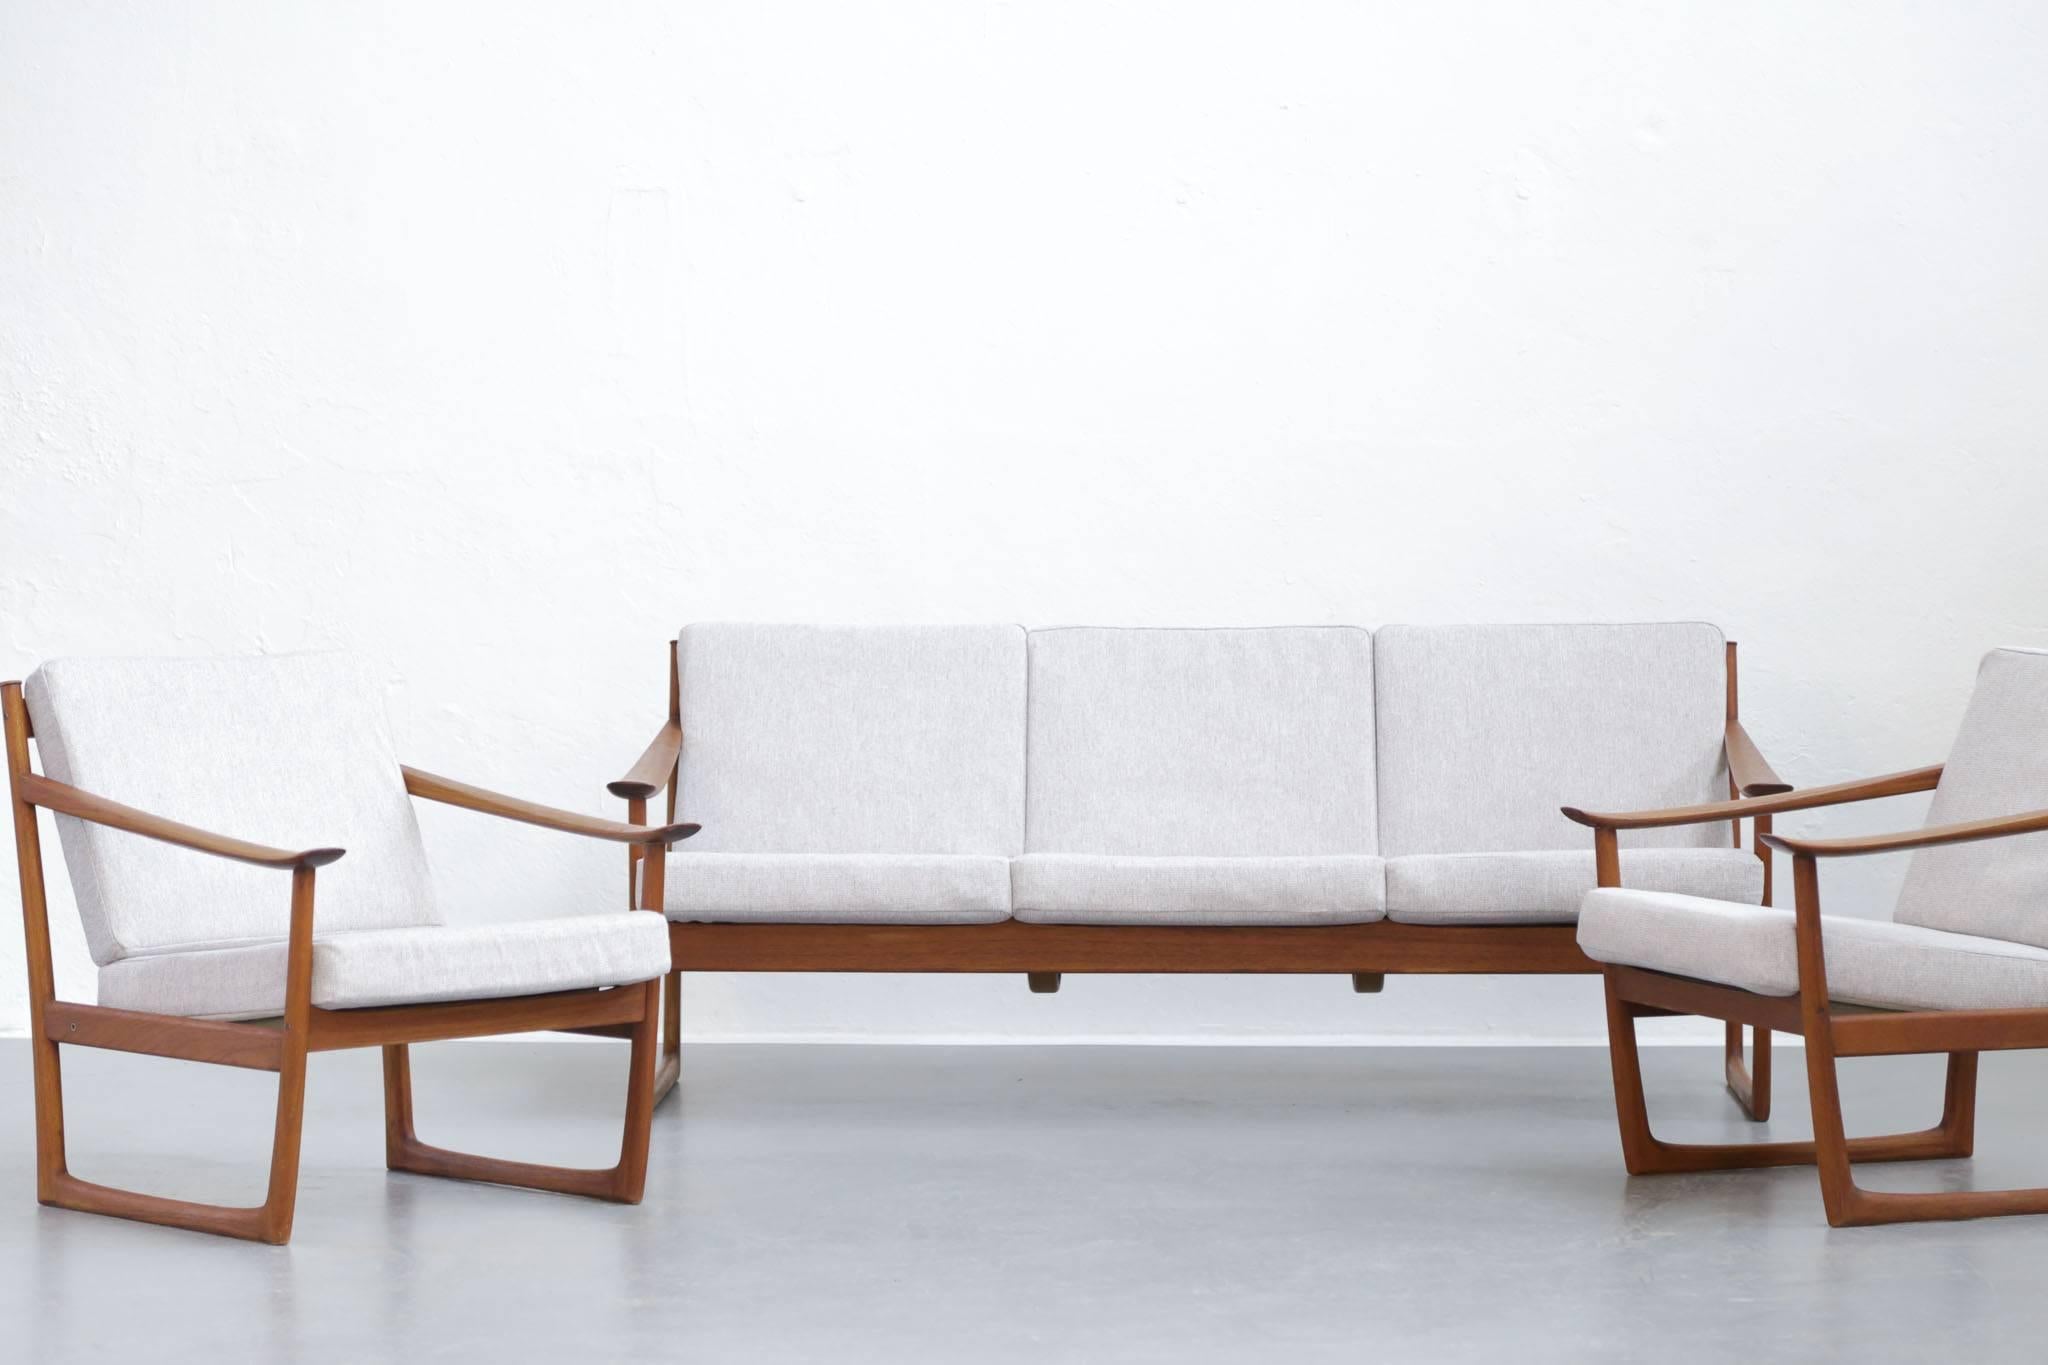 Midcentury sofa 1960s designed by Peter Hvidt & Orla Mølgaard FD130
Frame in teak, freshly reupholstered
Perfect condition.

               